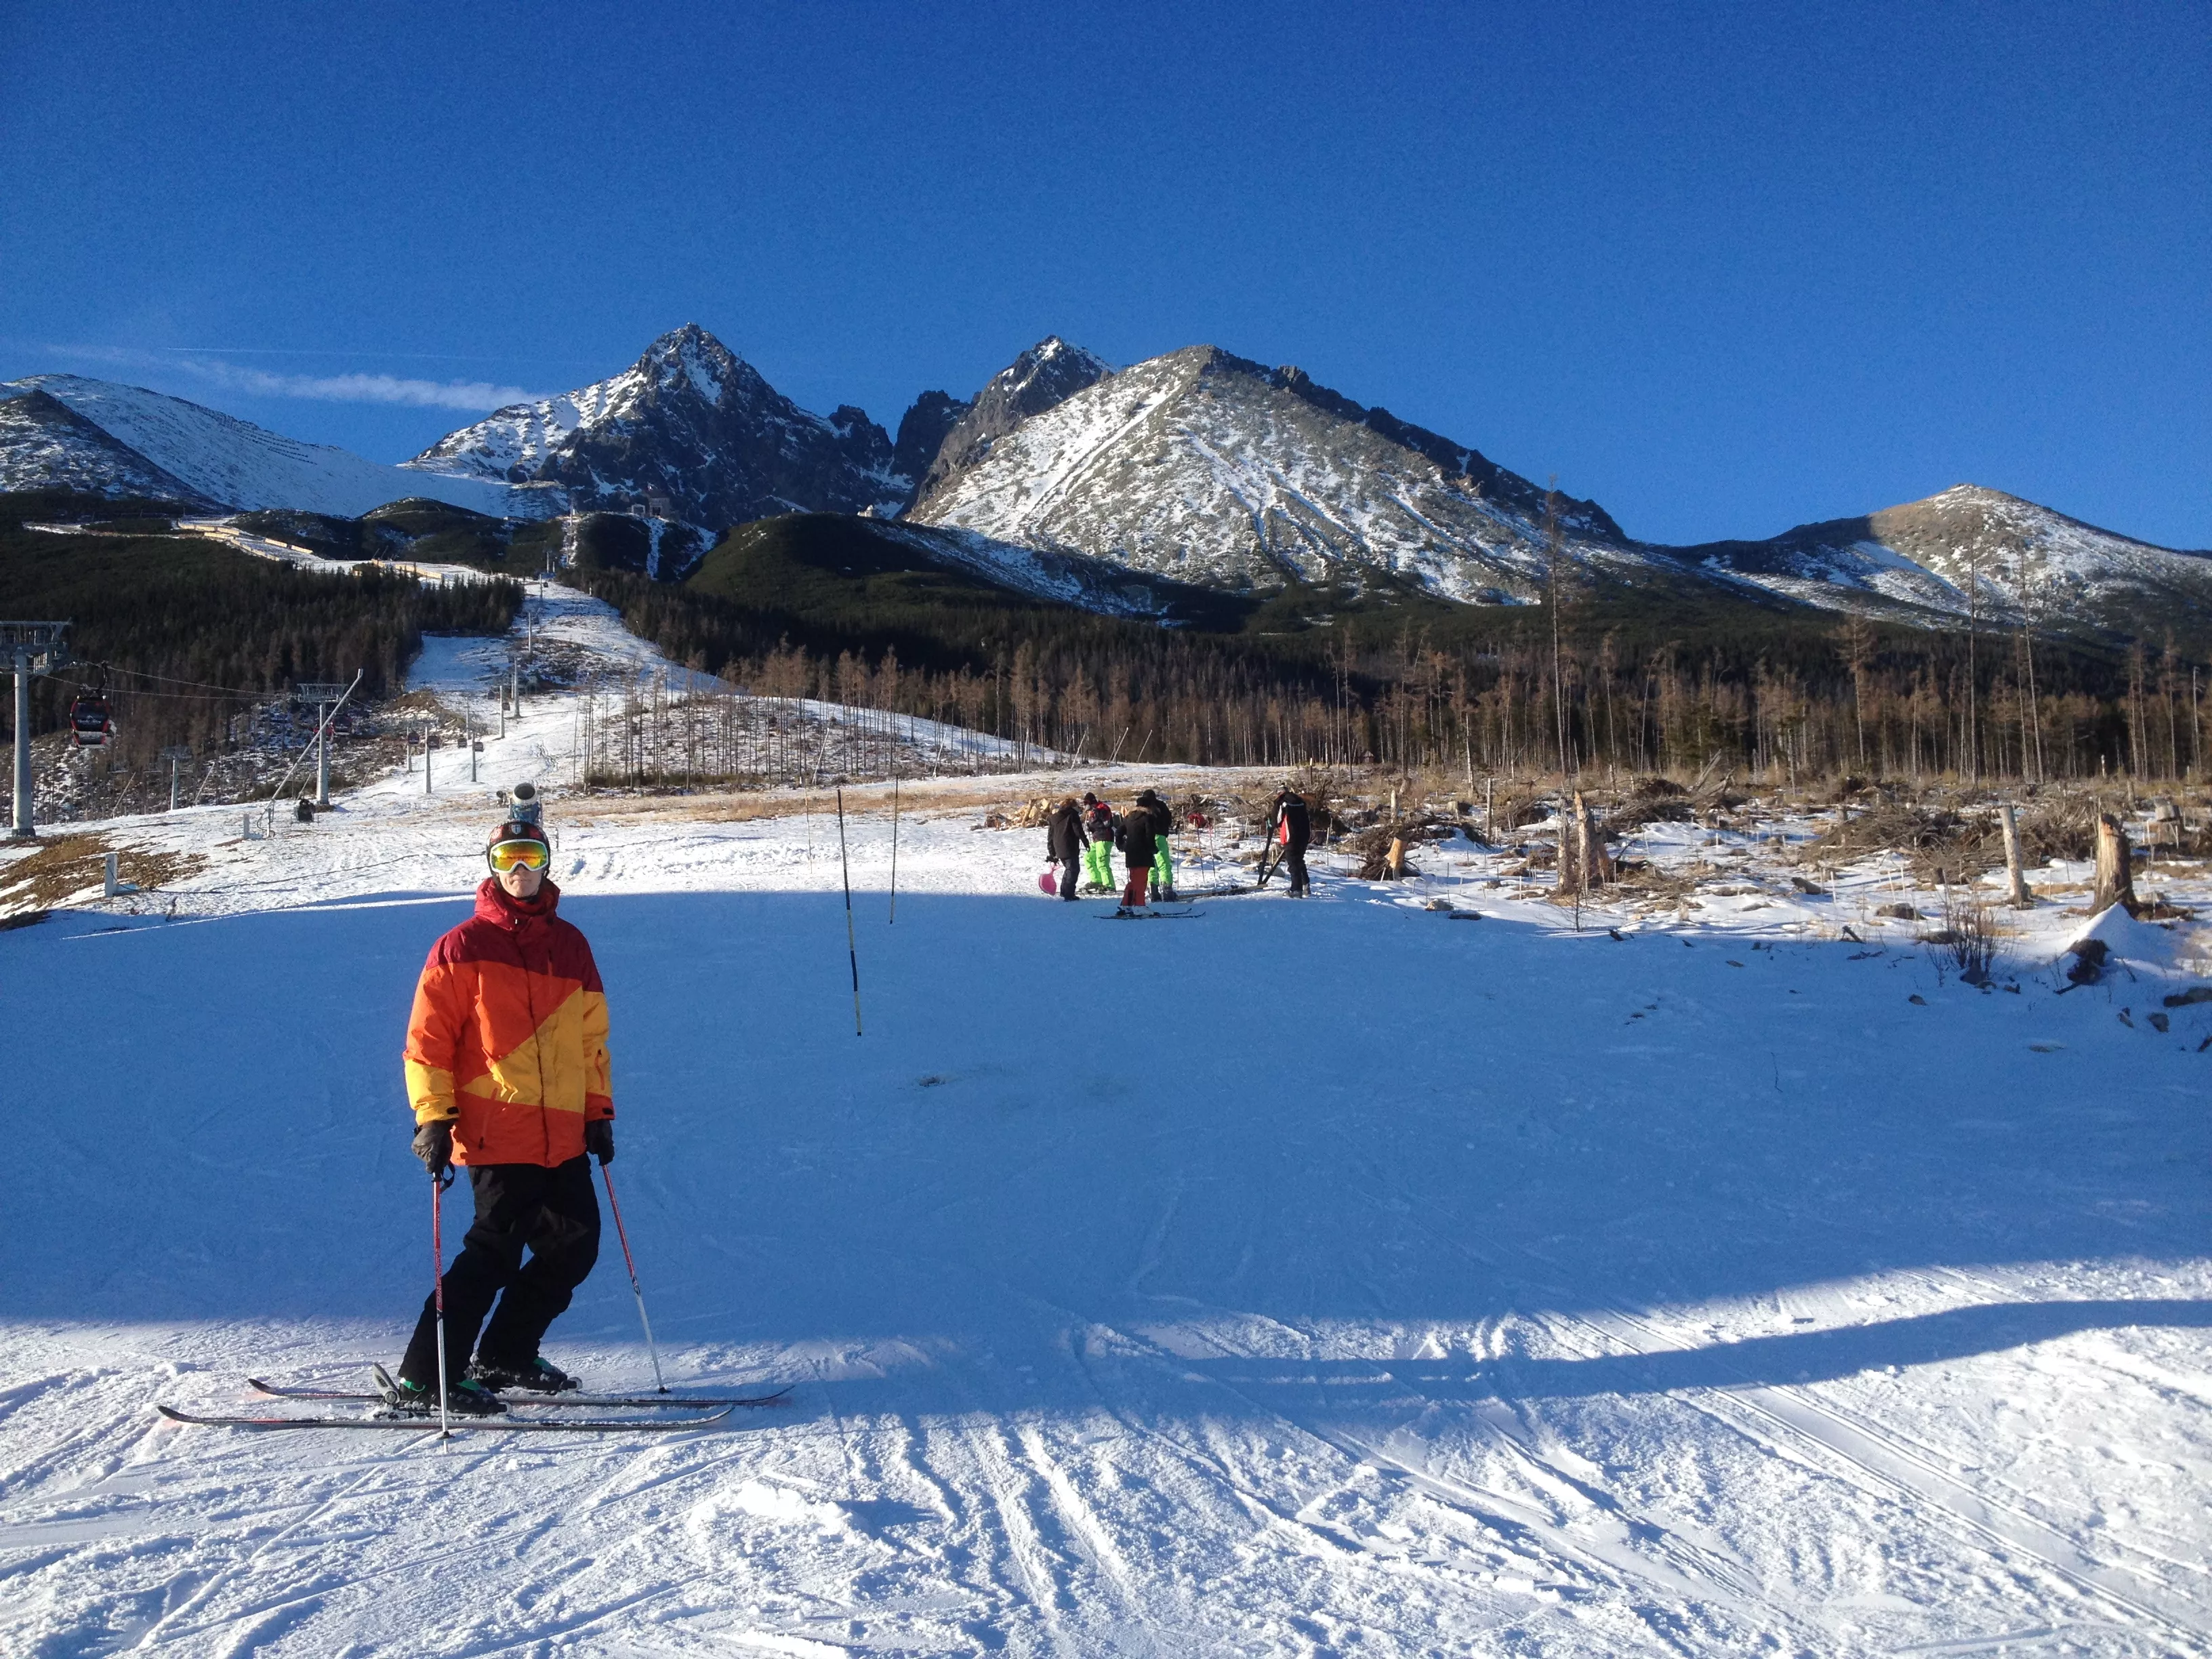 Lopusna Dolina in Slovakia, Europe | Snowboarding,Skiing - Rated 3.7